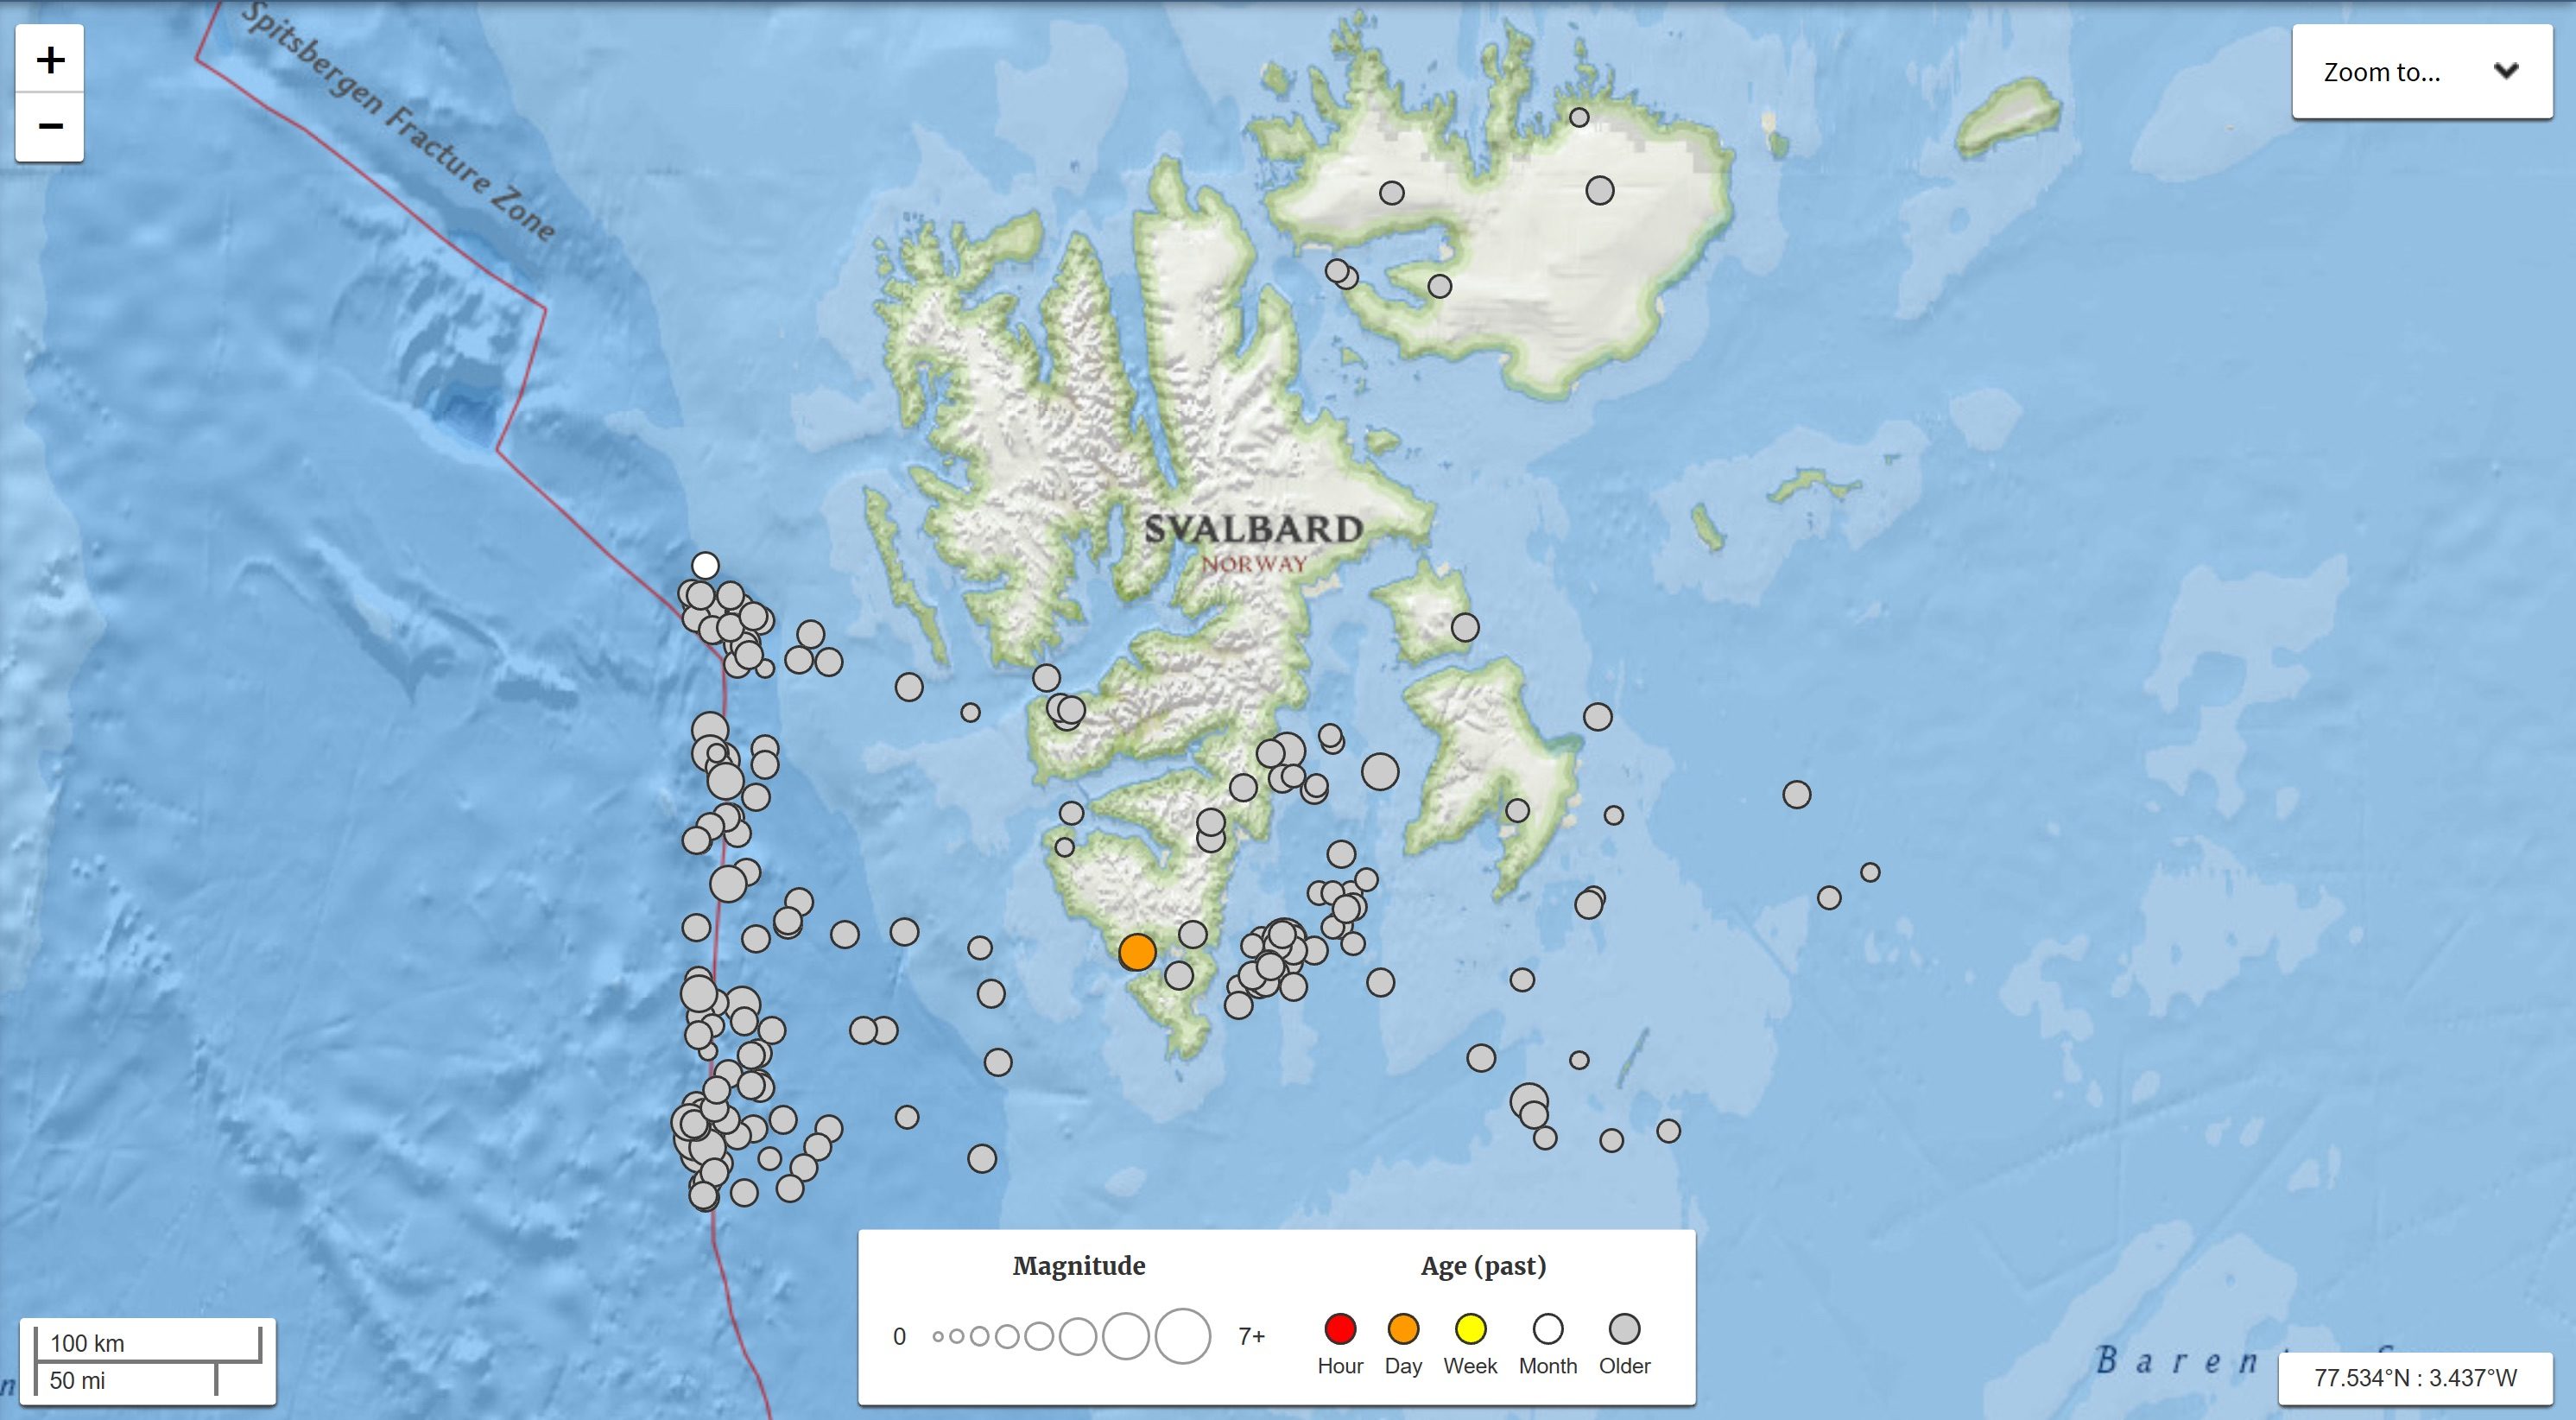 historical seismicity around Svalbard